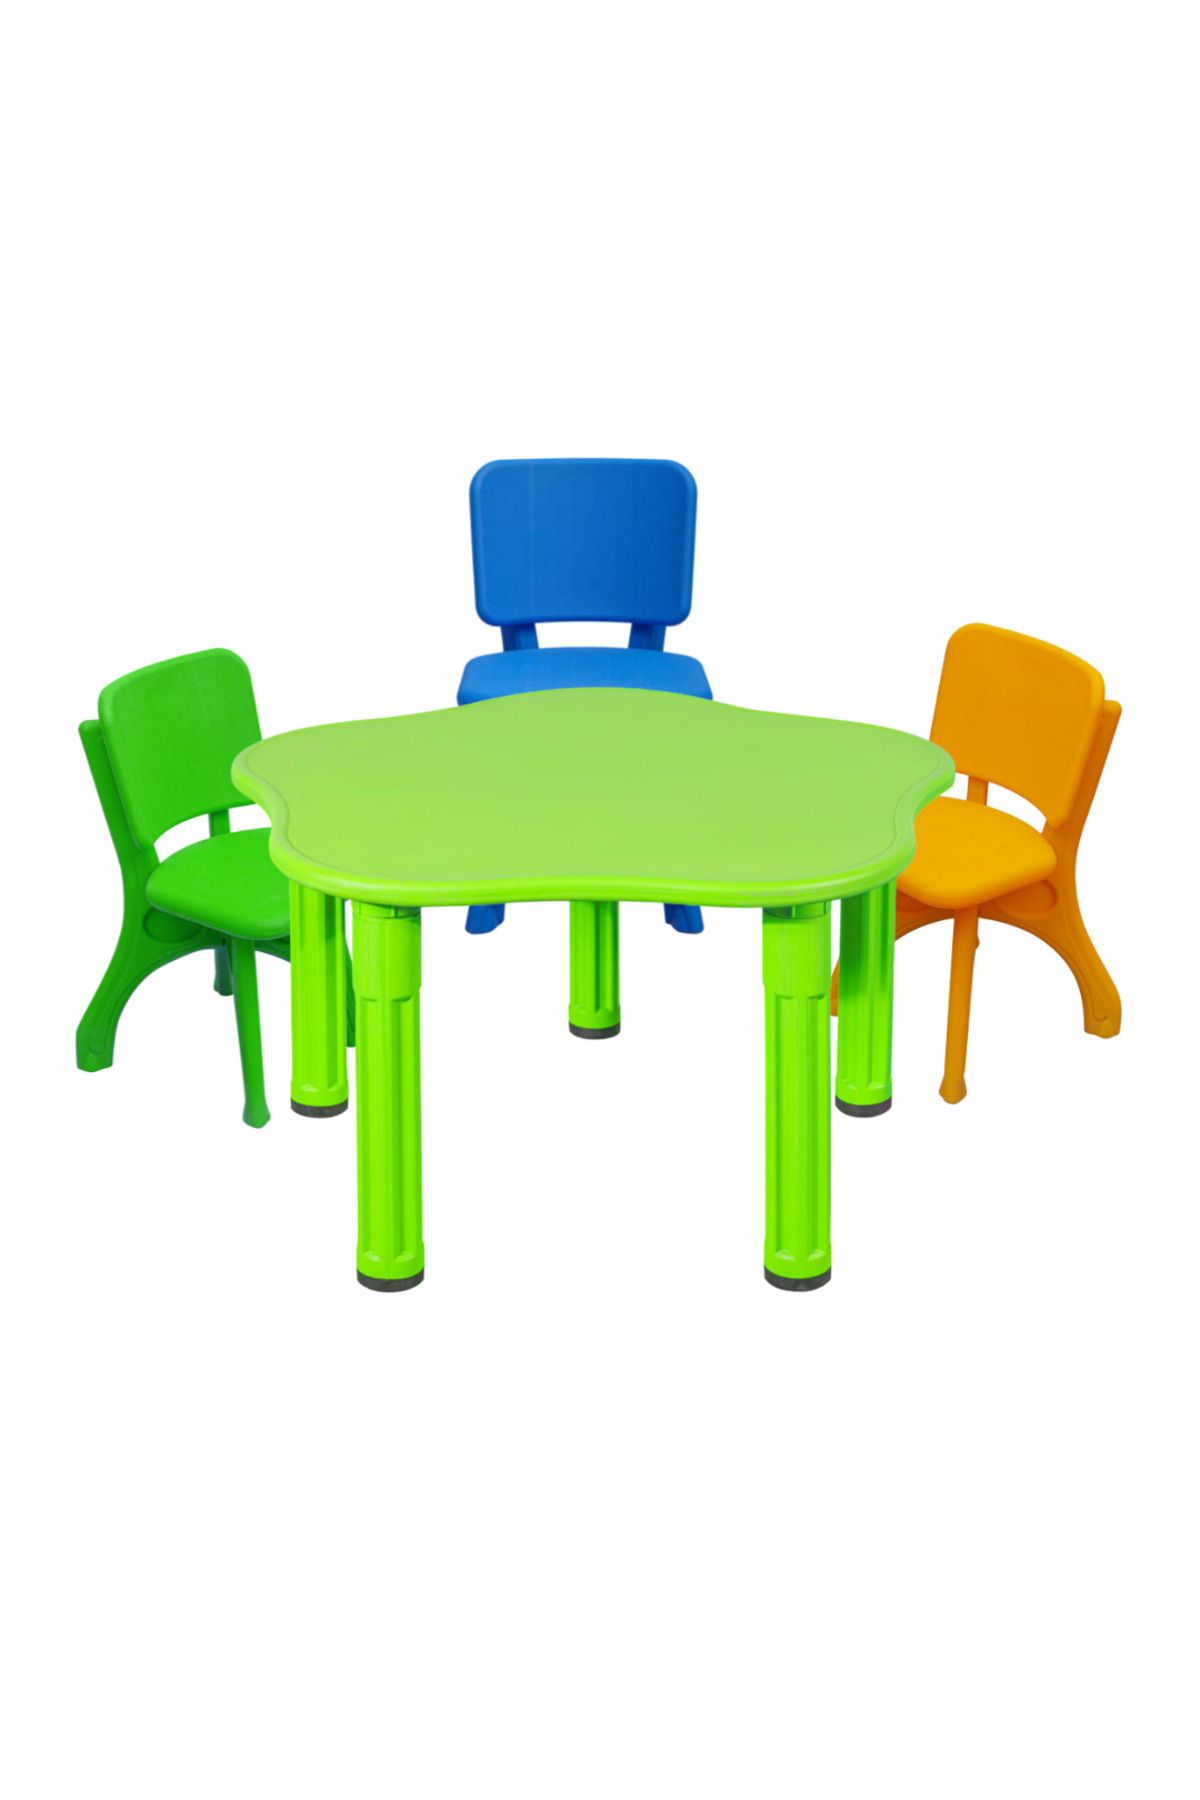 MUPARK Anaokulu - Kreş Masa ve Sandalye Set - 1 Masa - 3 Sandalye - Çocuk Sandalye - Çocuk Masa - Aktivite